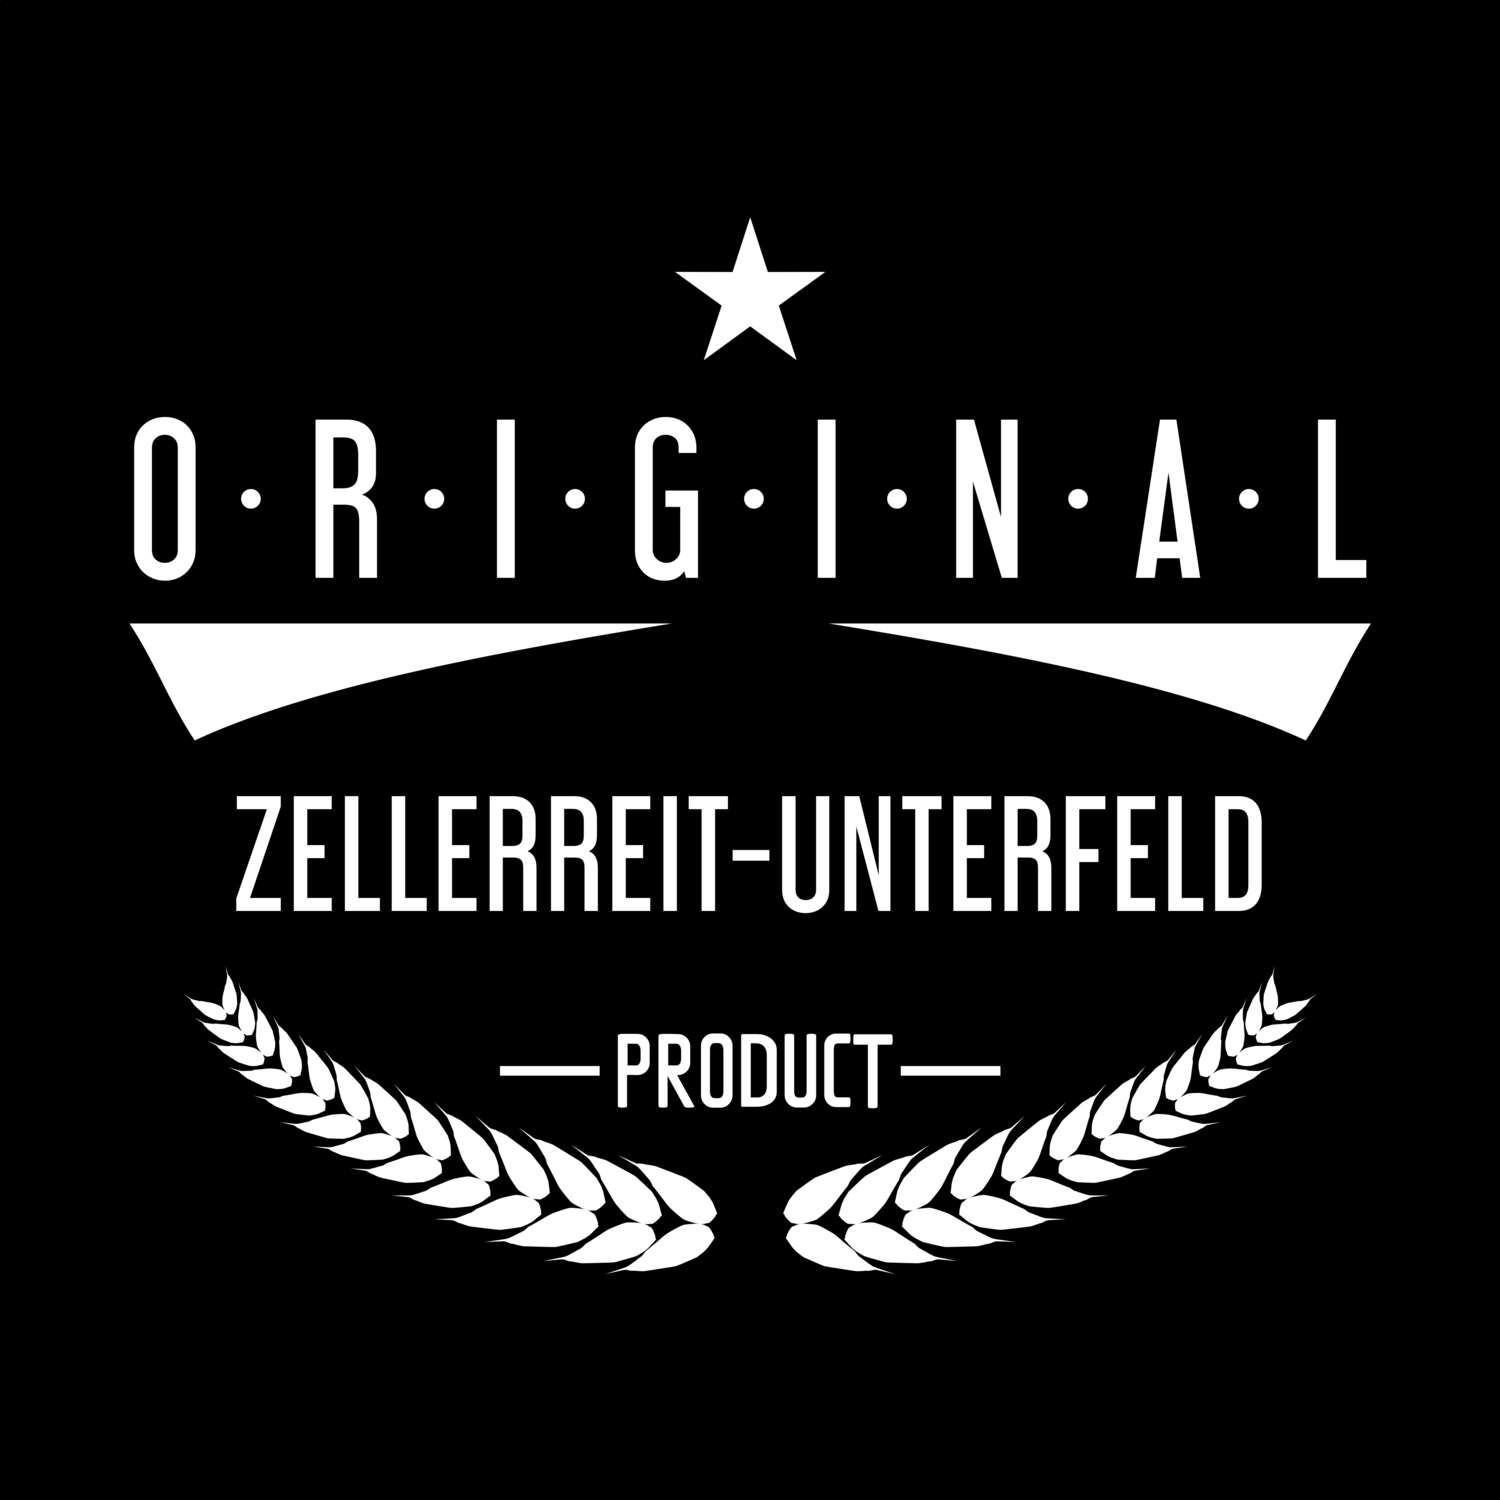 Zellerreit-Unterfeld T-Shirt »Original Product«